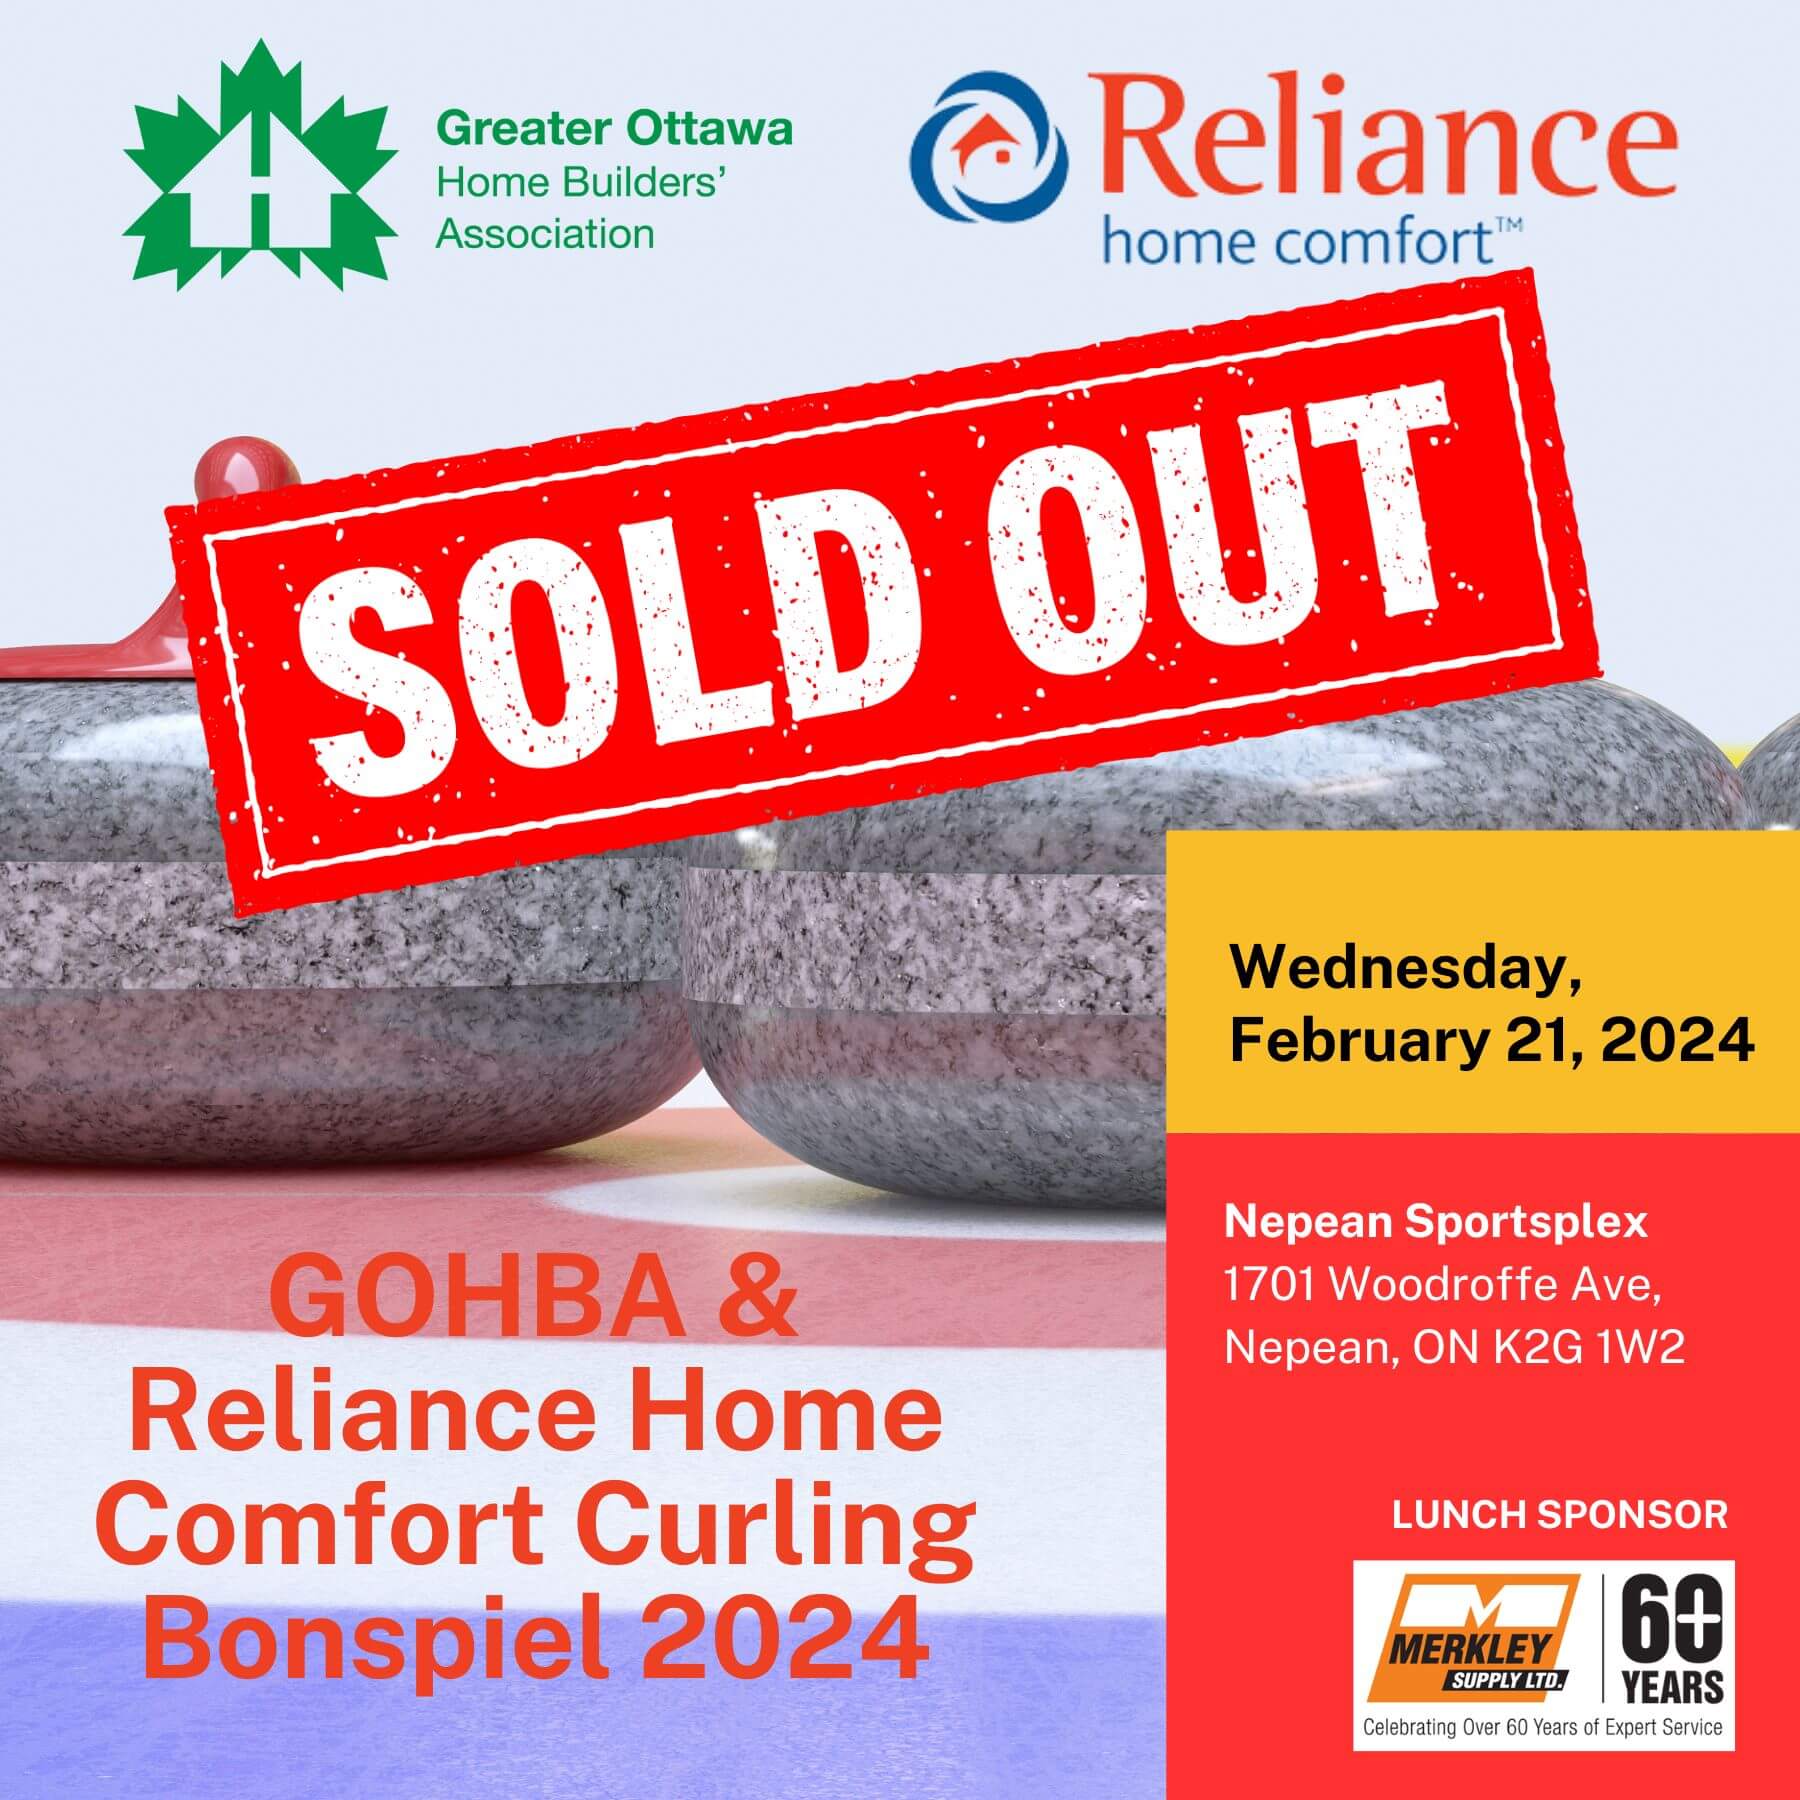 GOHBA &amp; Reliance Home Comfort Curling Bonspiel 2024 sold out